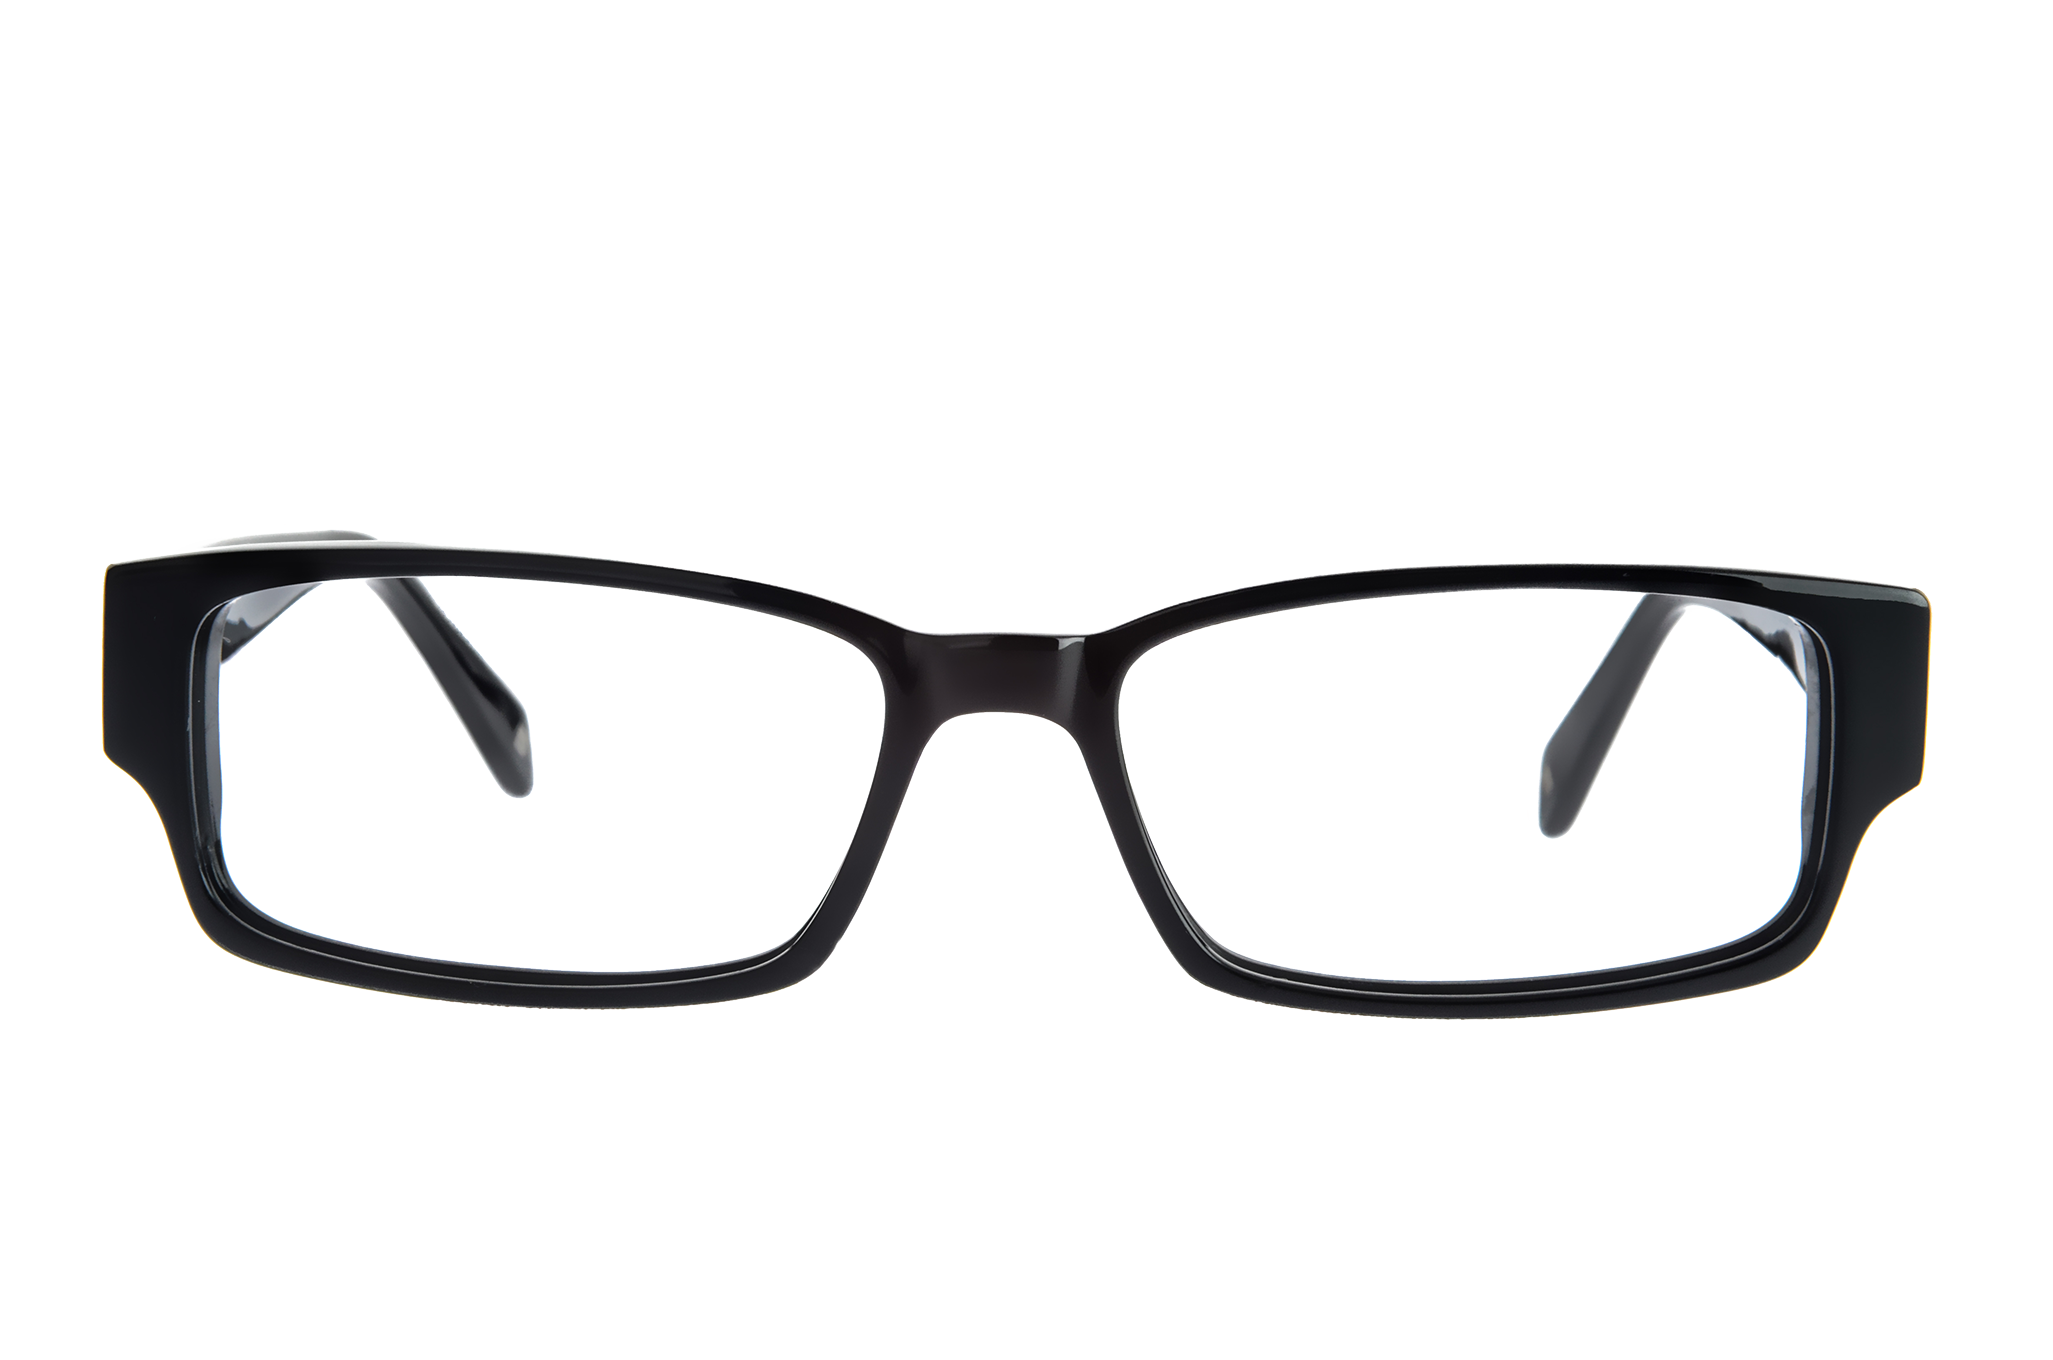 Glasses PNG File